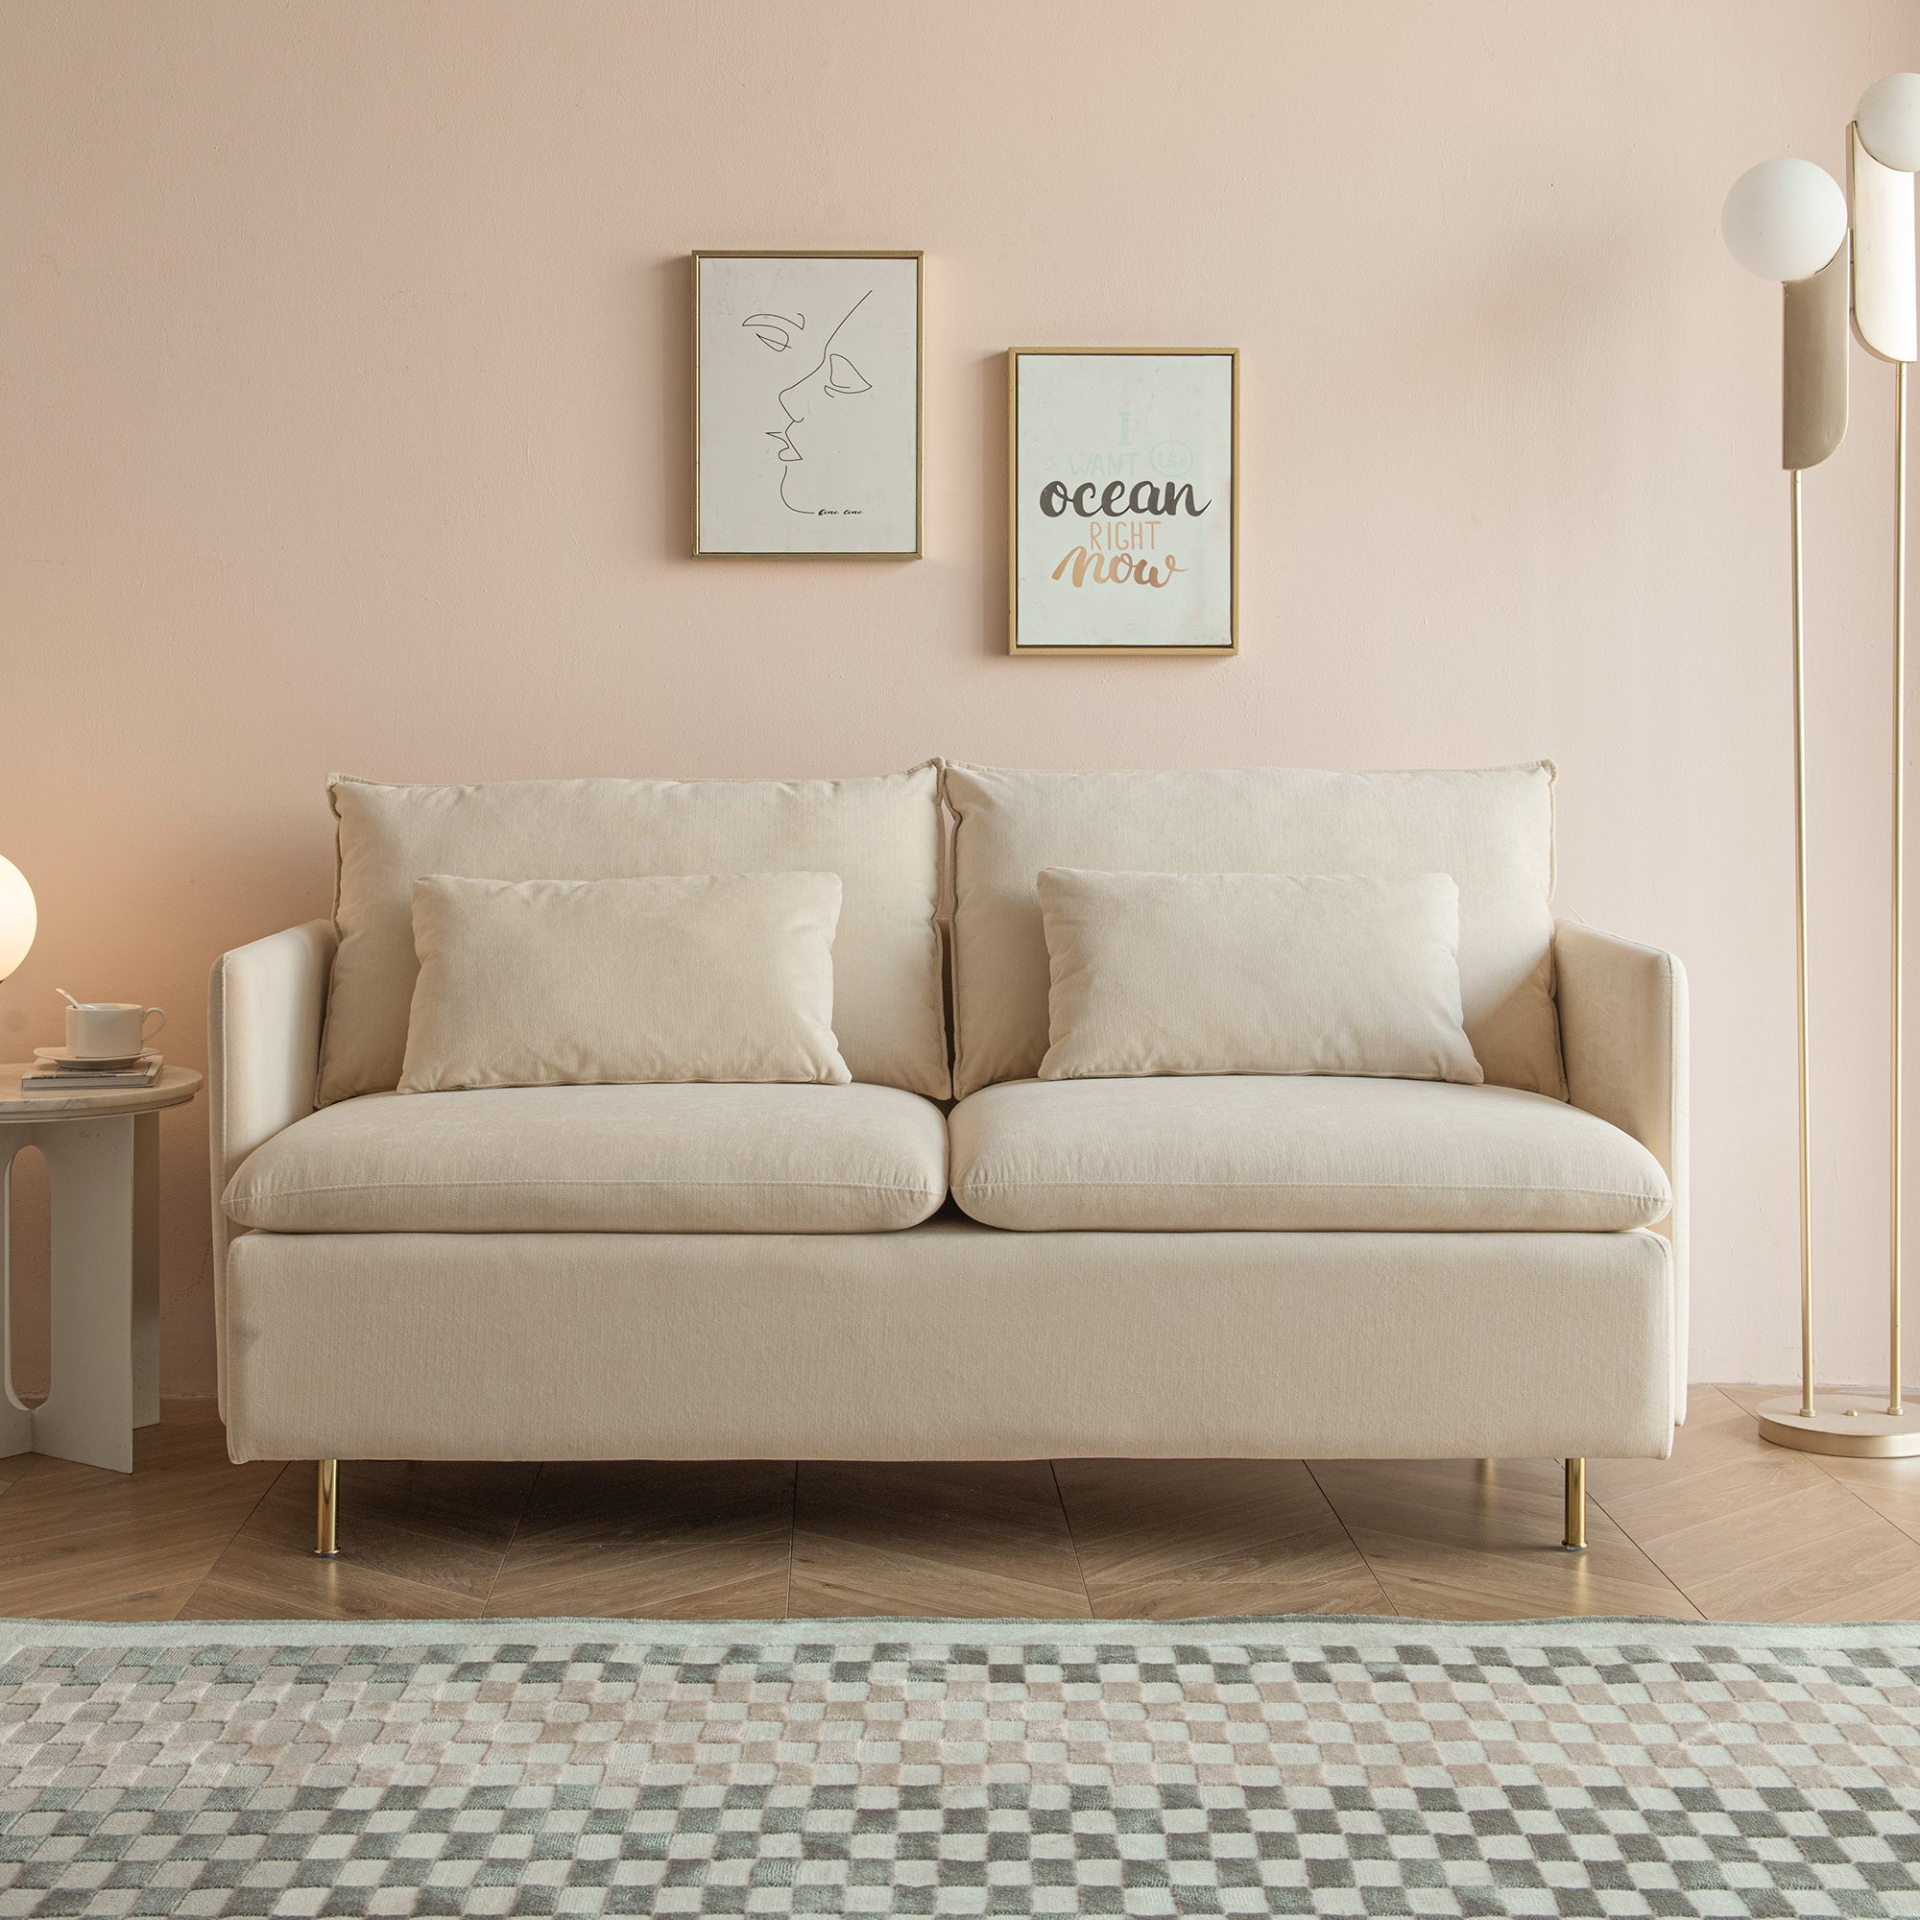 Modern Upholstered Loveseat Sofa,Beige Cotton Linen-63.8'' Môdern Space Gallery